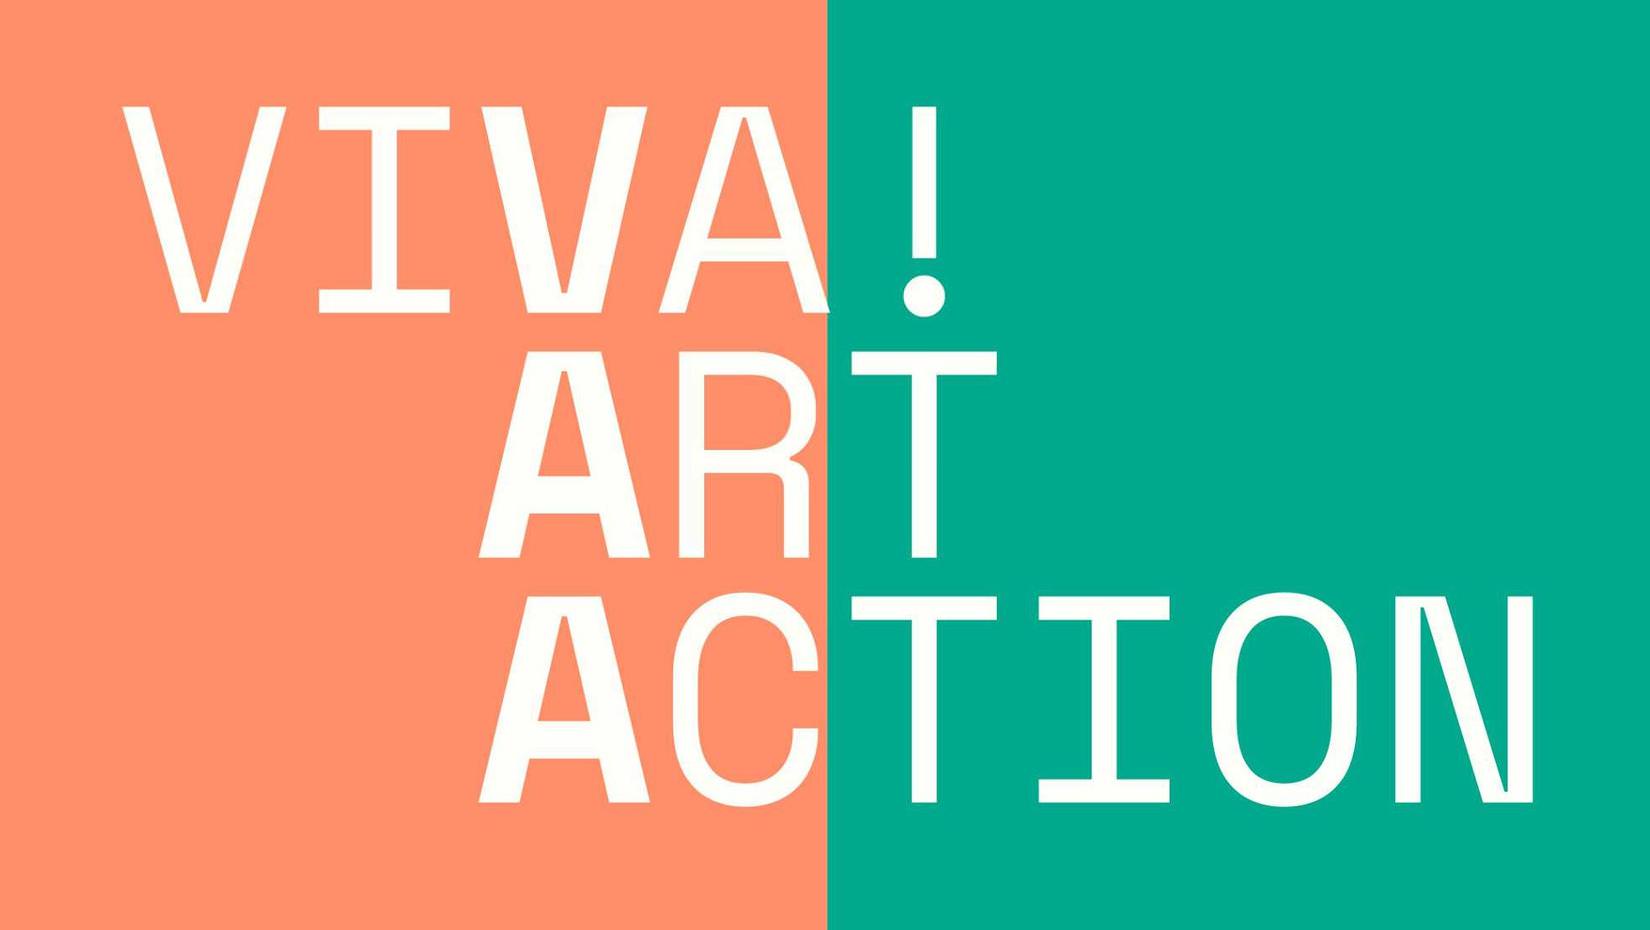 VIVA! ART ACTION